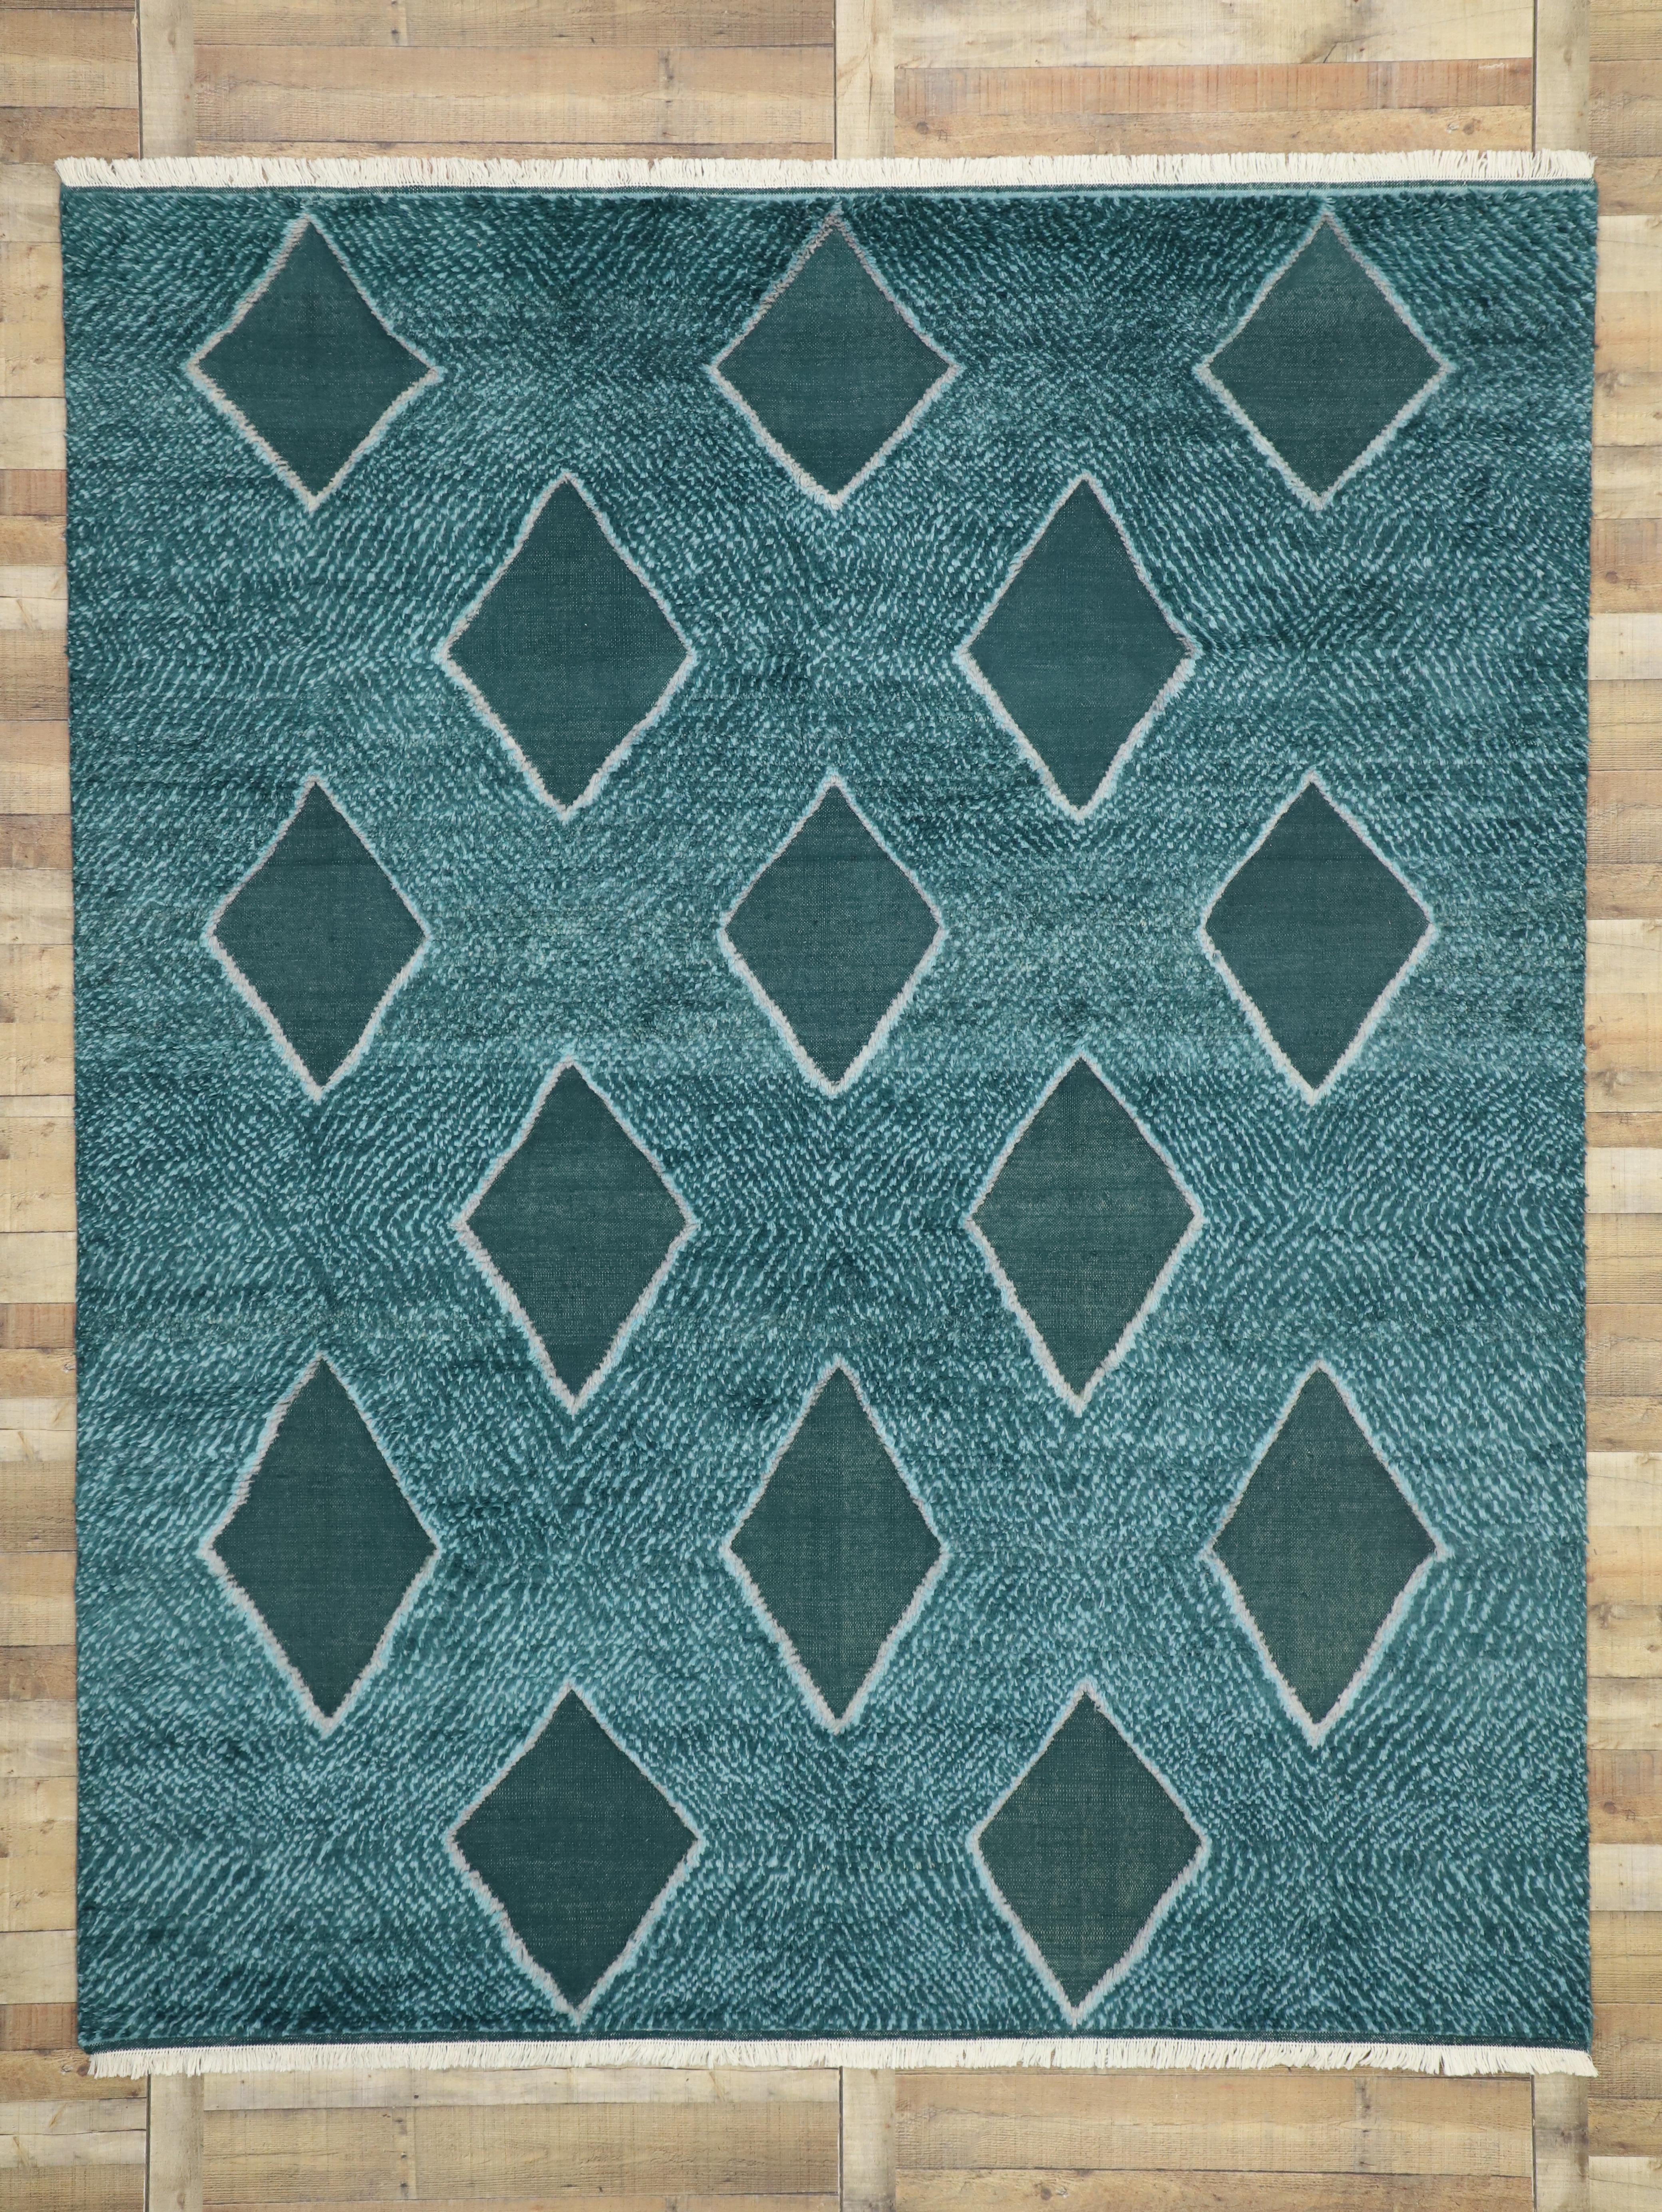 New Contemporary Moroccan Texture Area Rug Geometric Diamond Pattern 1